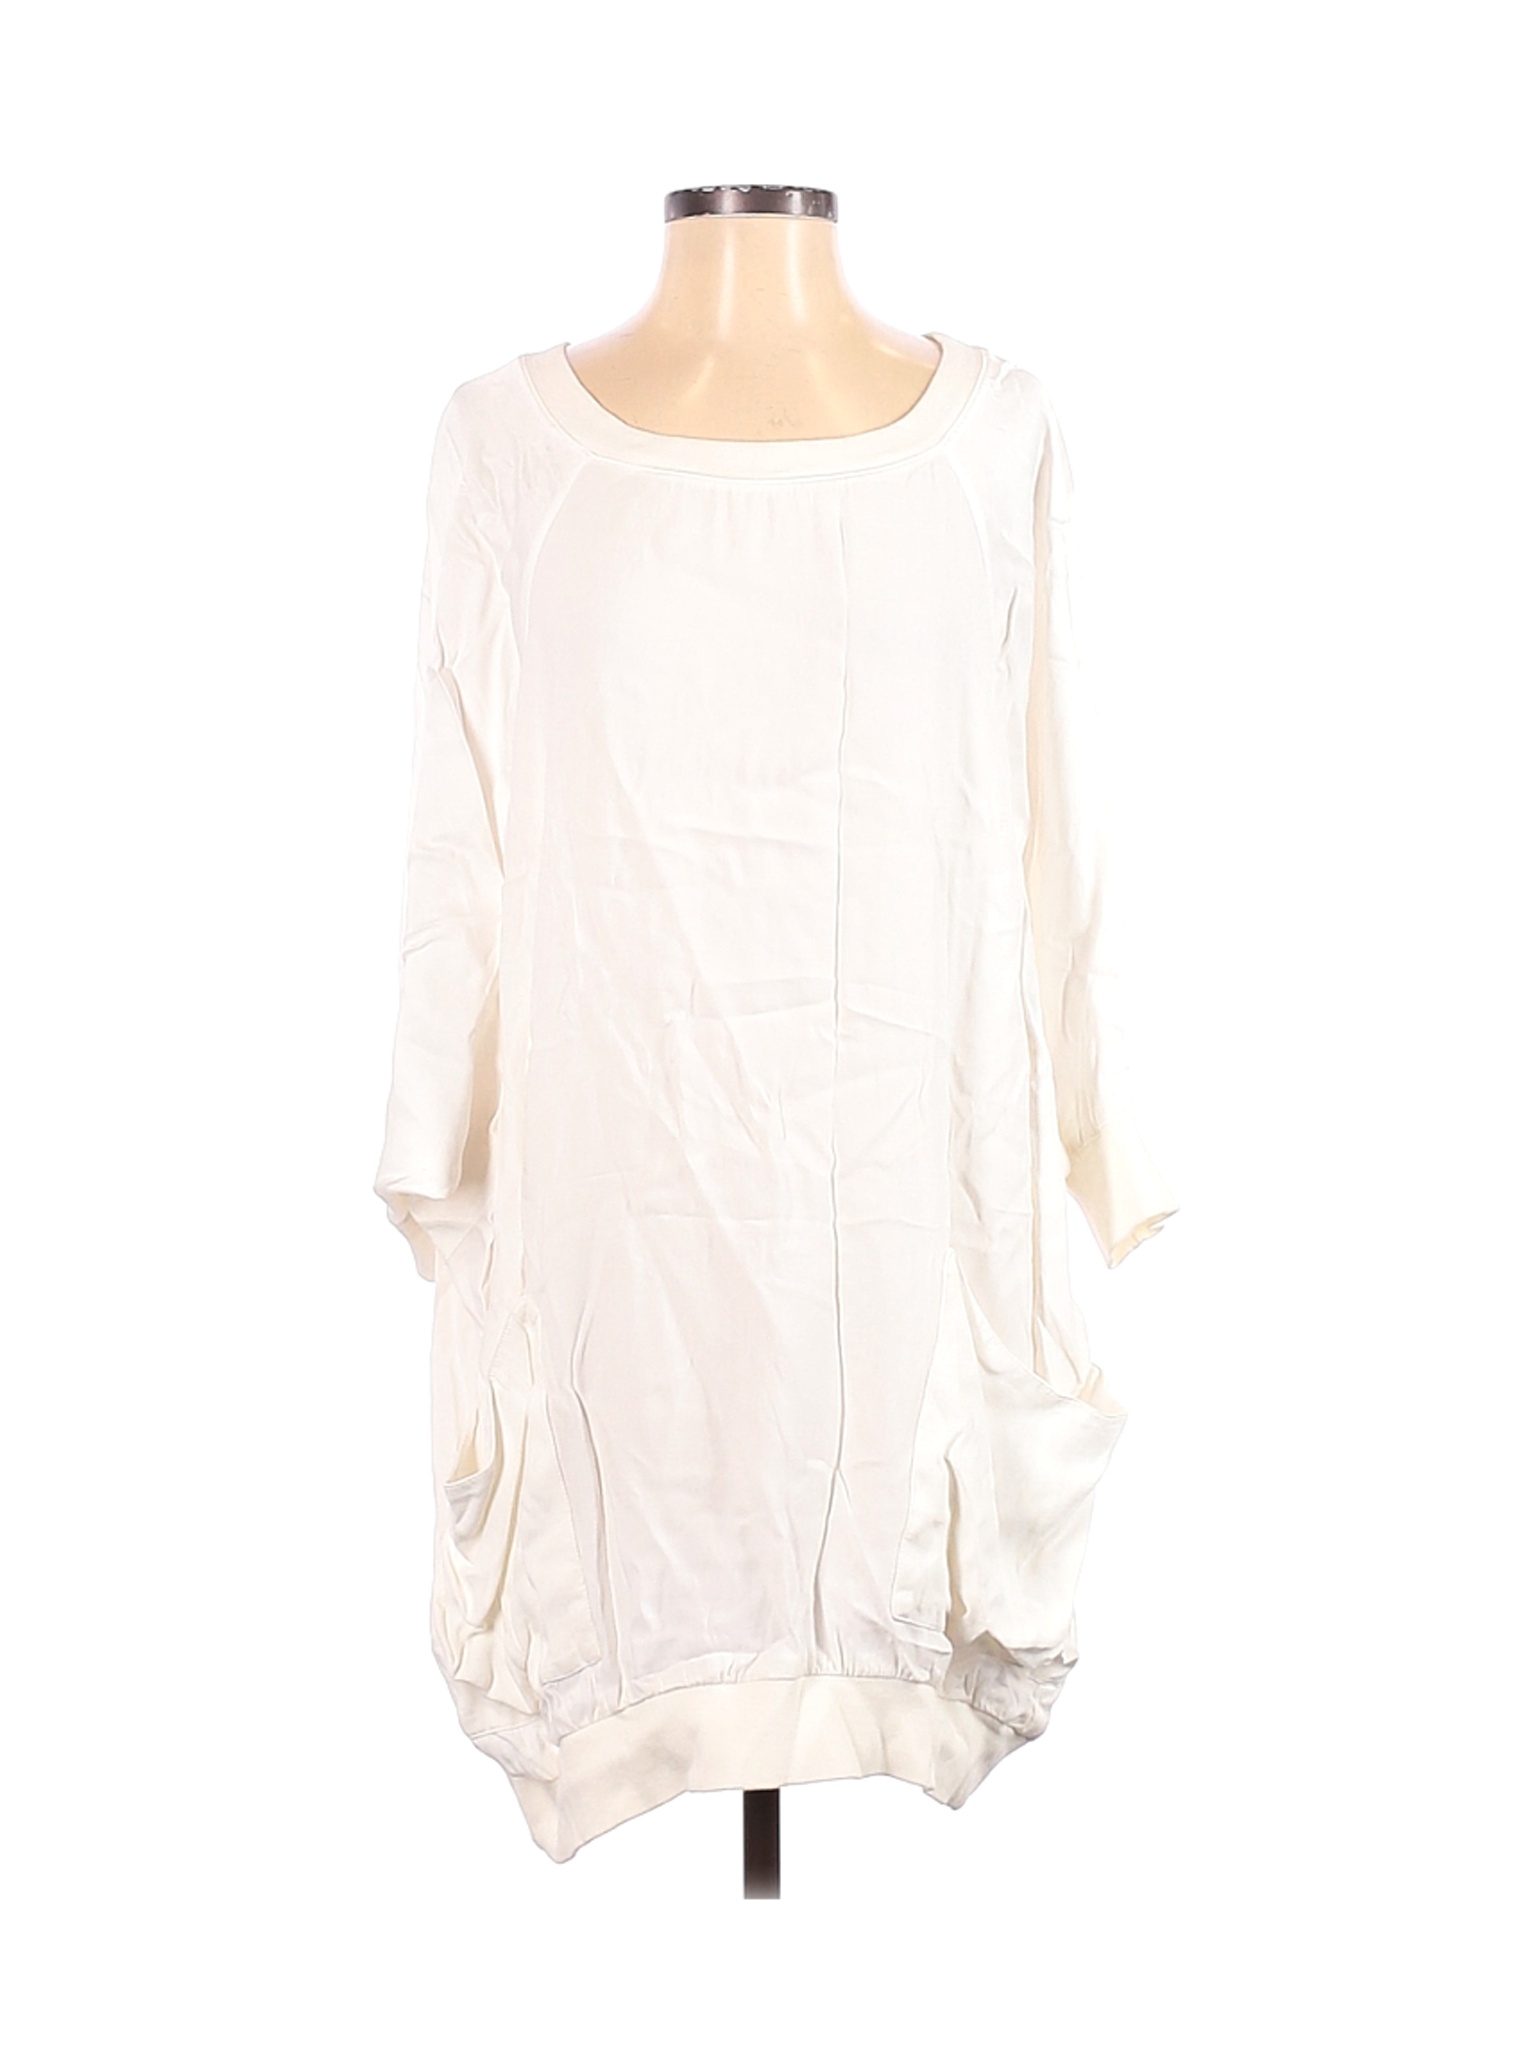 Free People Women White 3/4 Sleeve Blouse XS | eBay